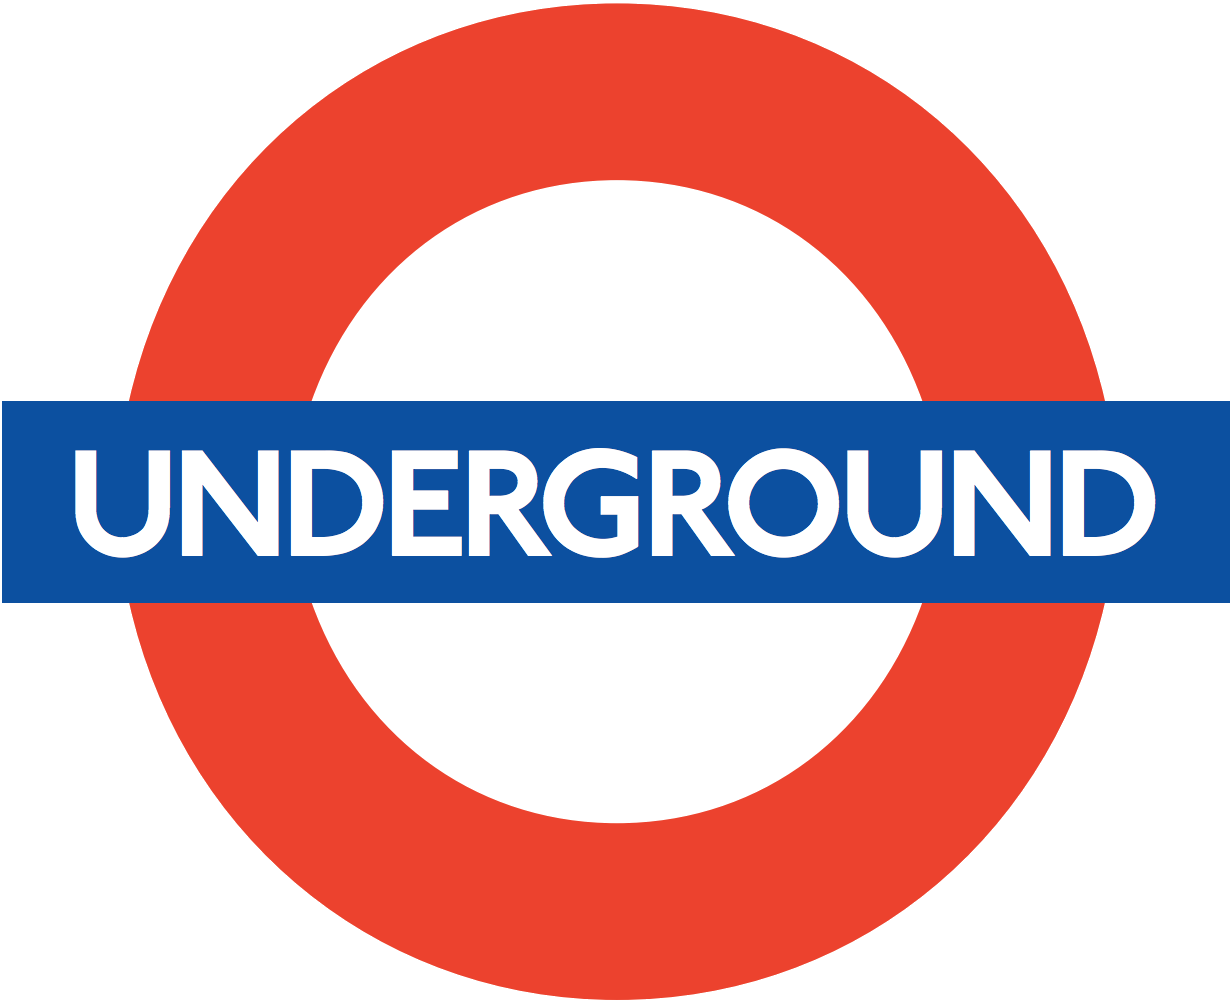 Tube Logo